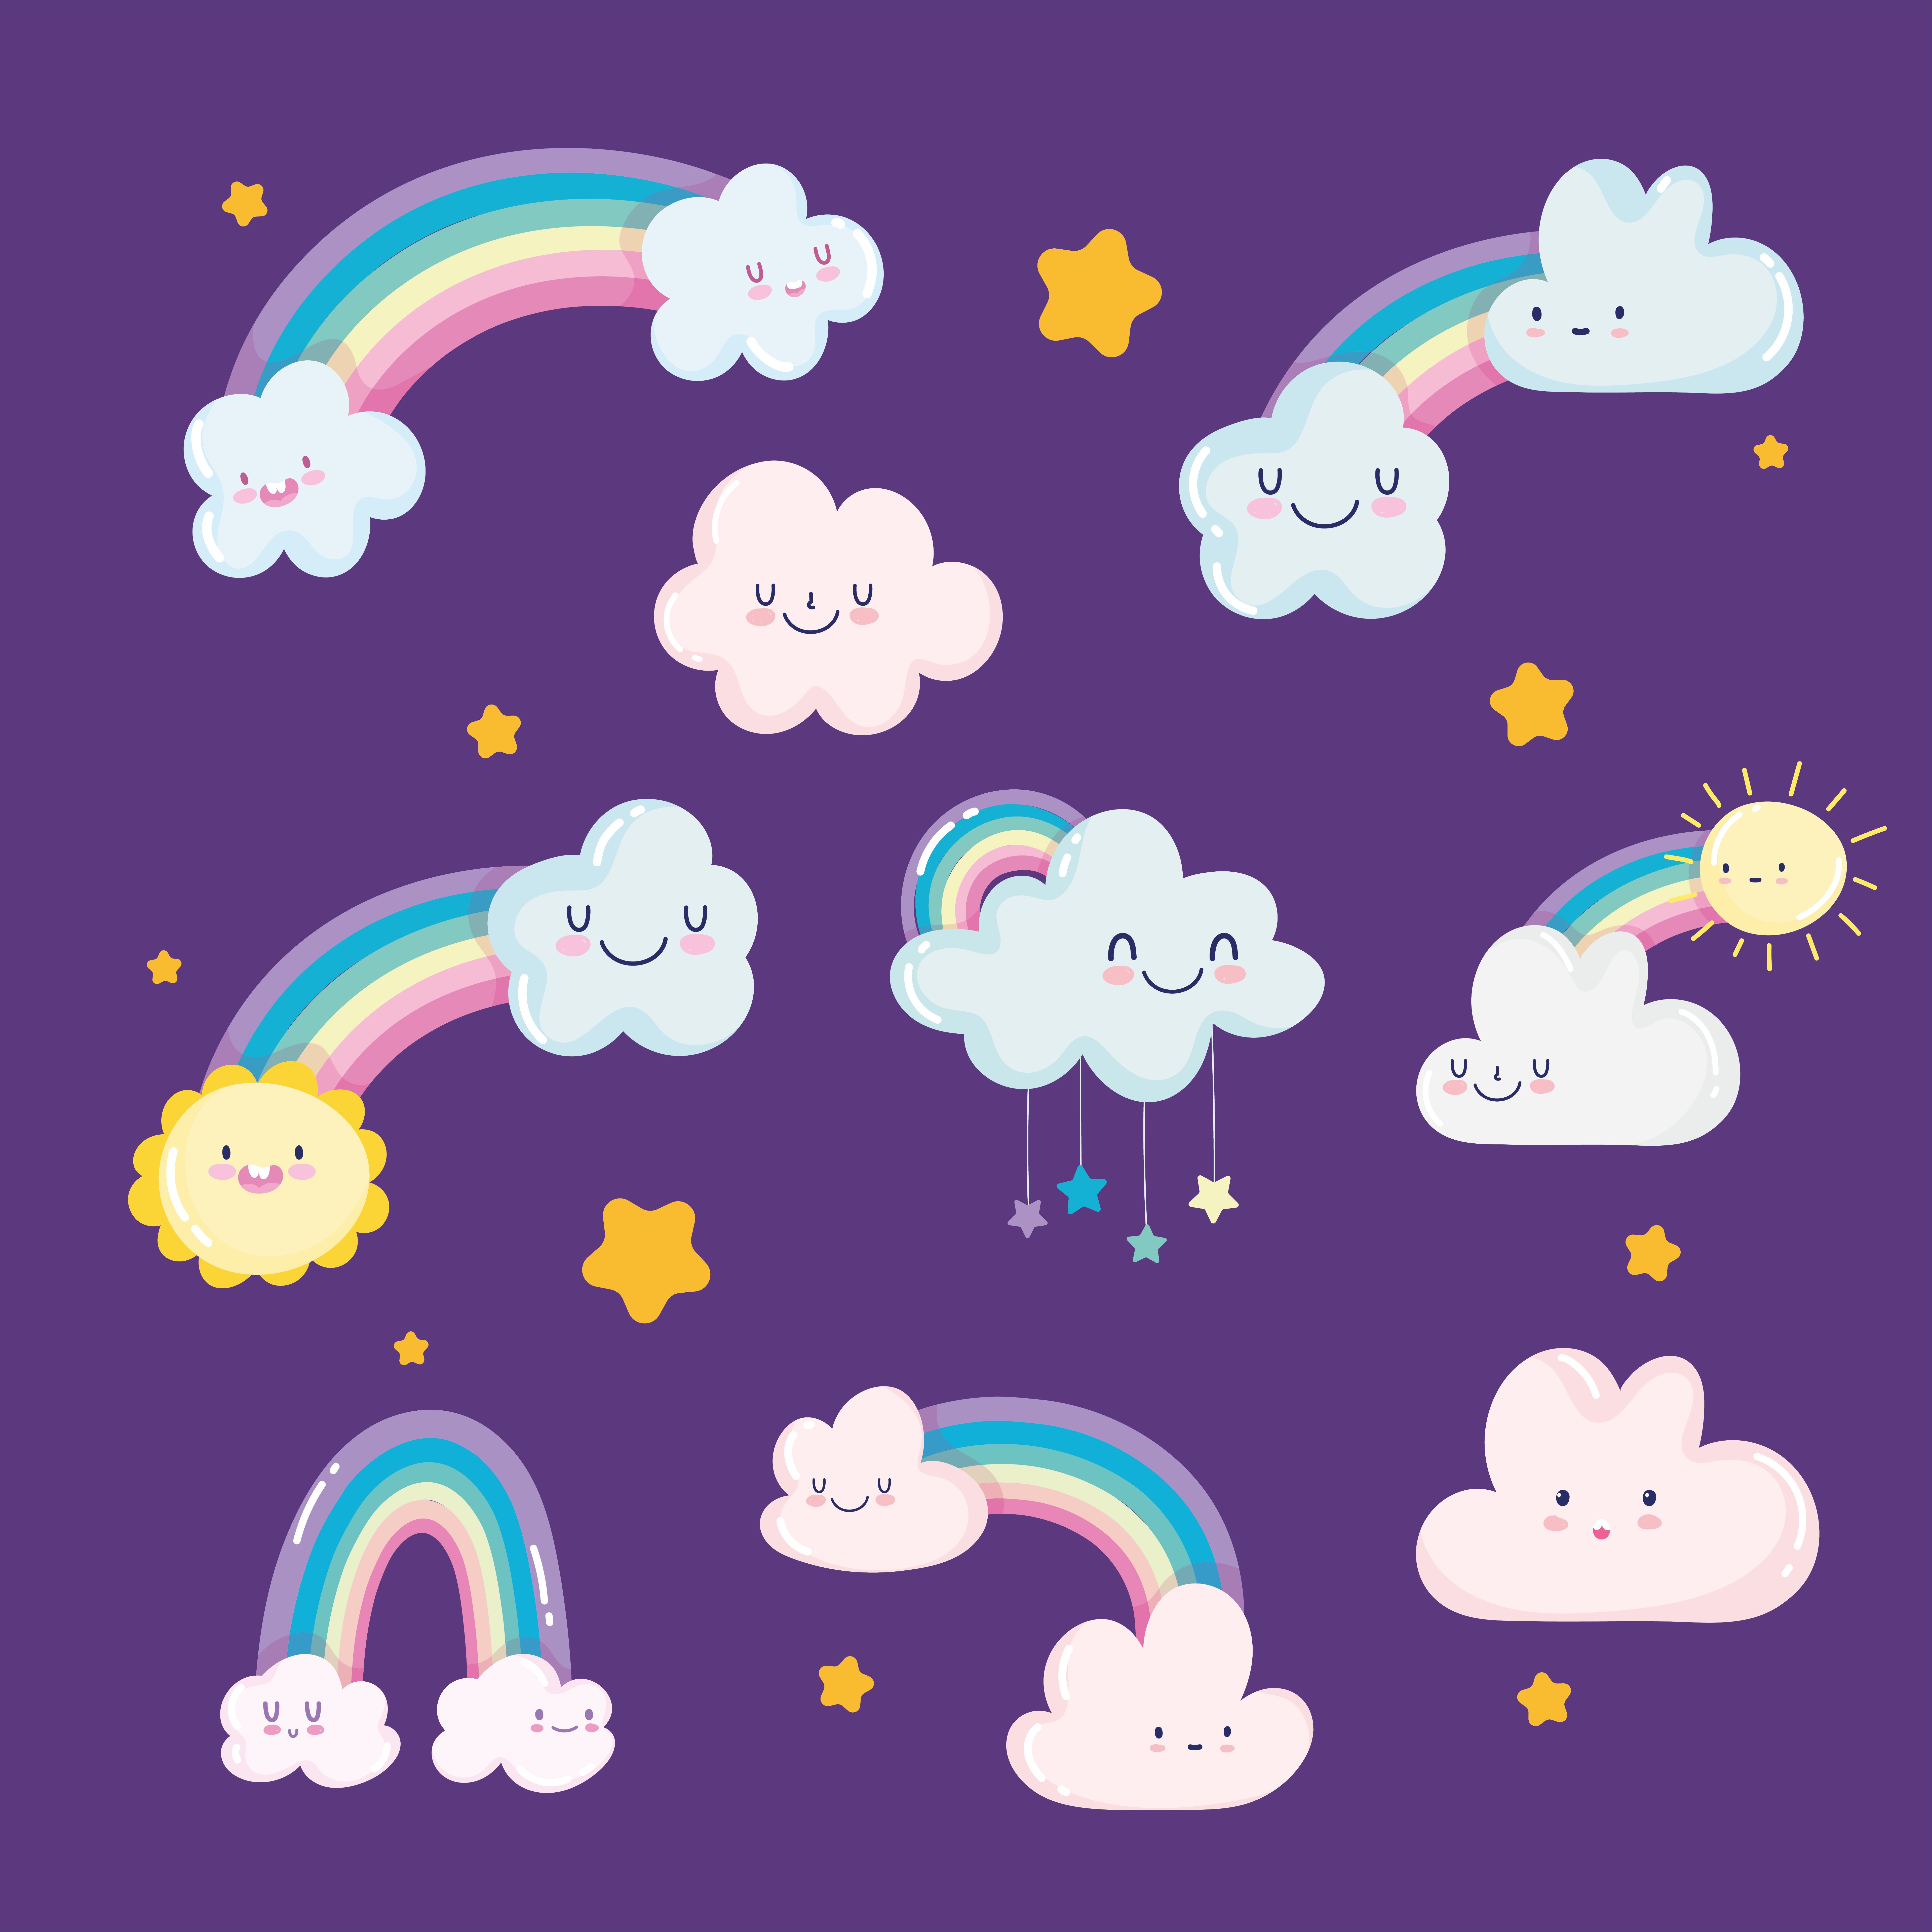 Cute rainbows, clouds and stars wallpaper Free Vectors, Clipart Graphics & Vector Art